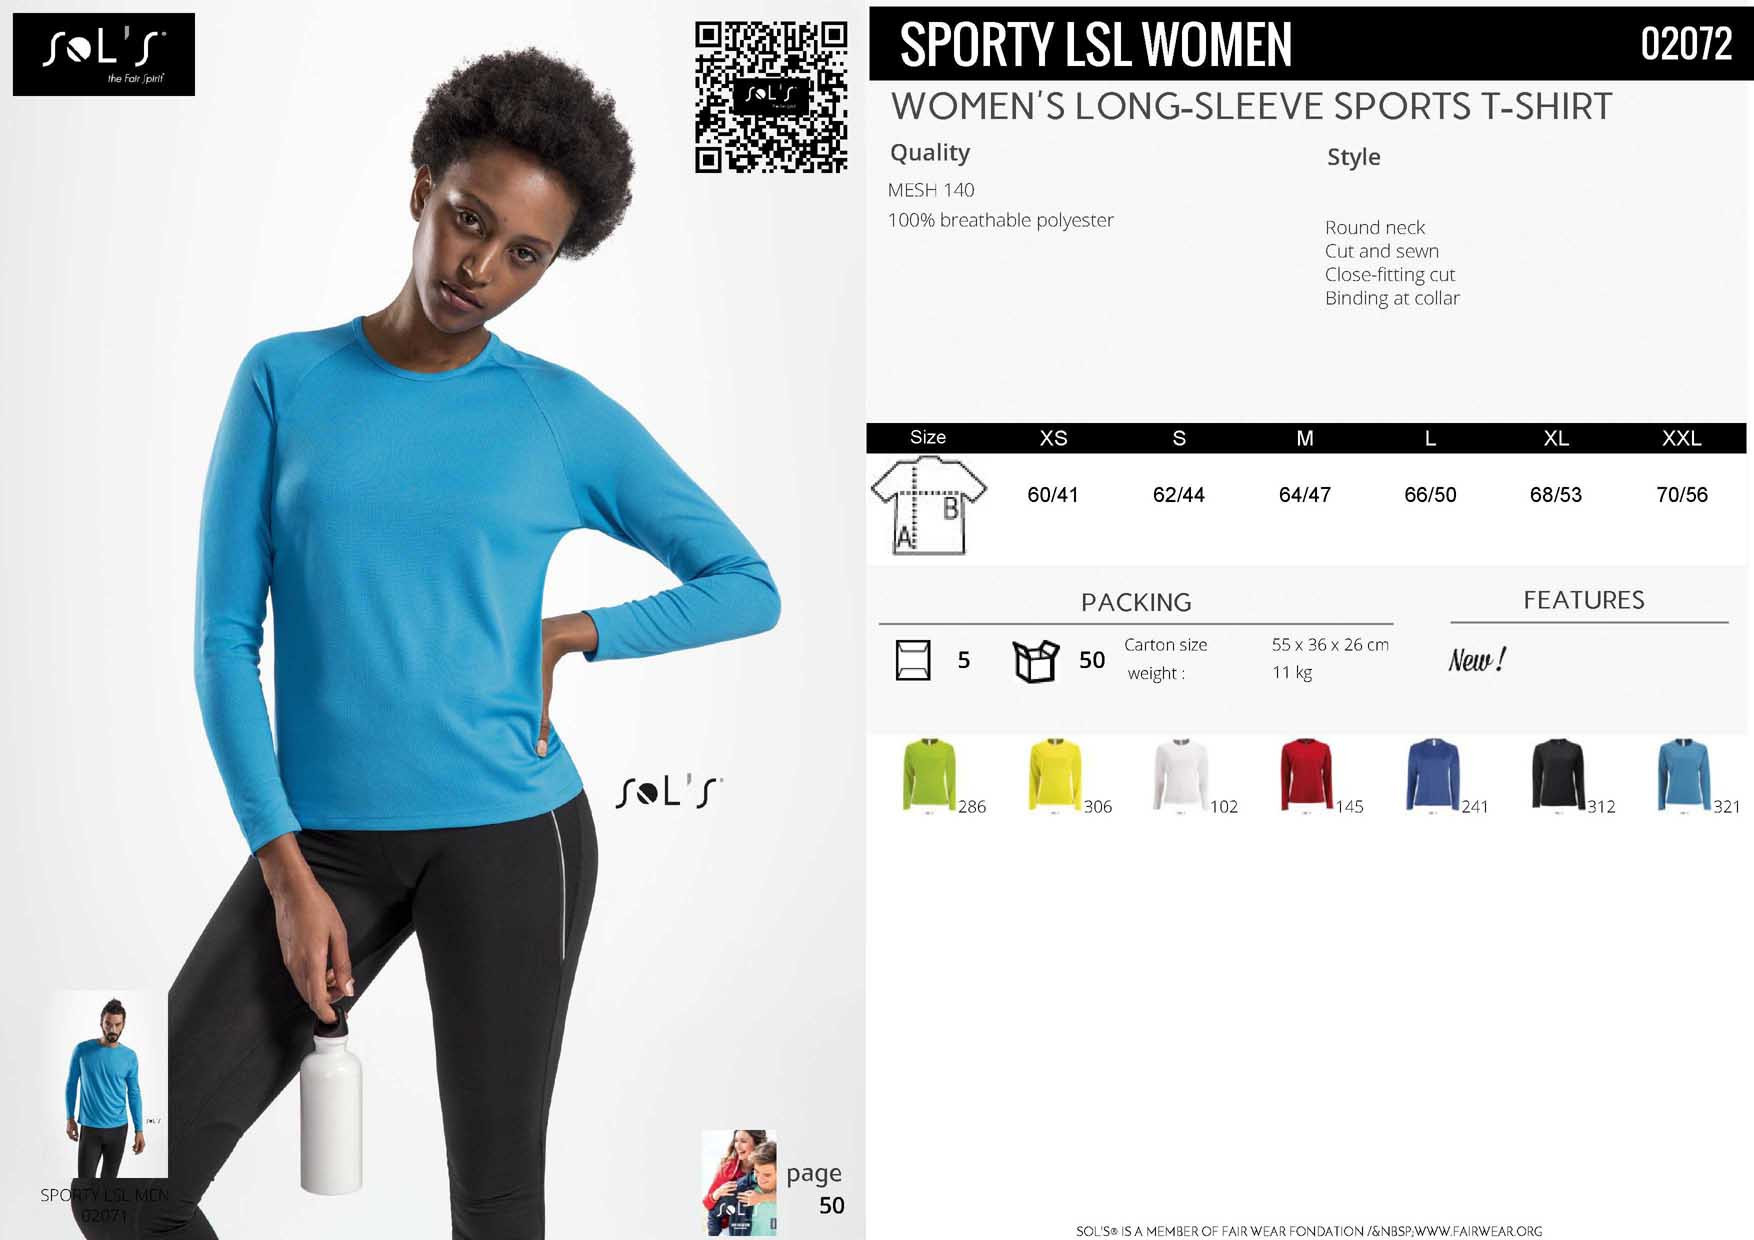 Caramba - SOL'S SPORTY LSL Women's Long Sleeve Sports T-Shirt